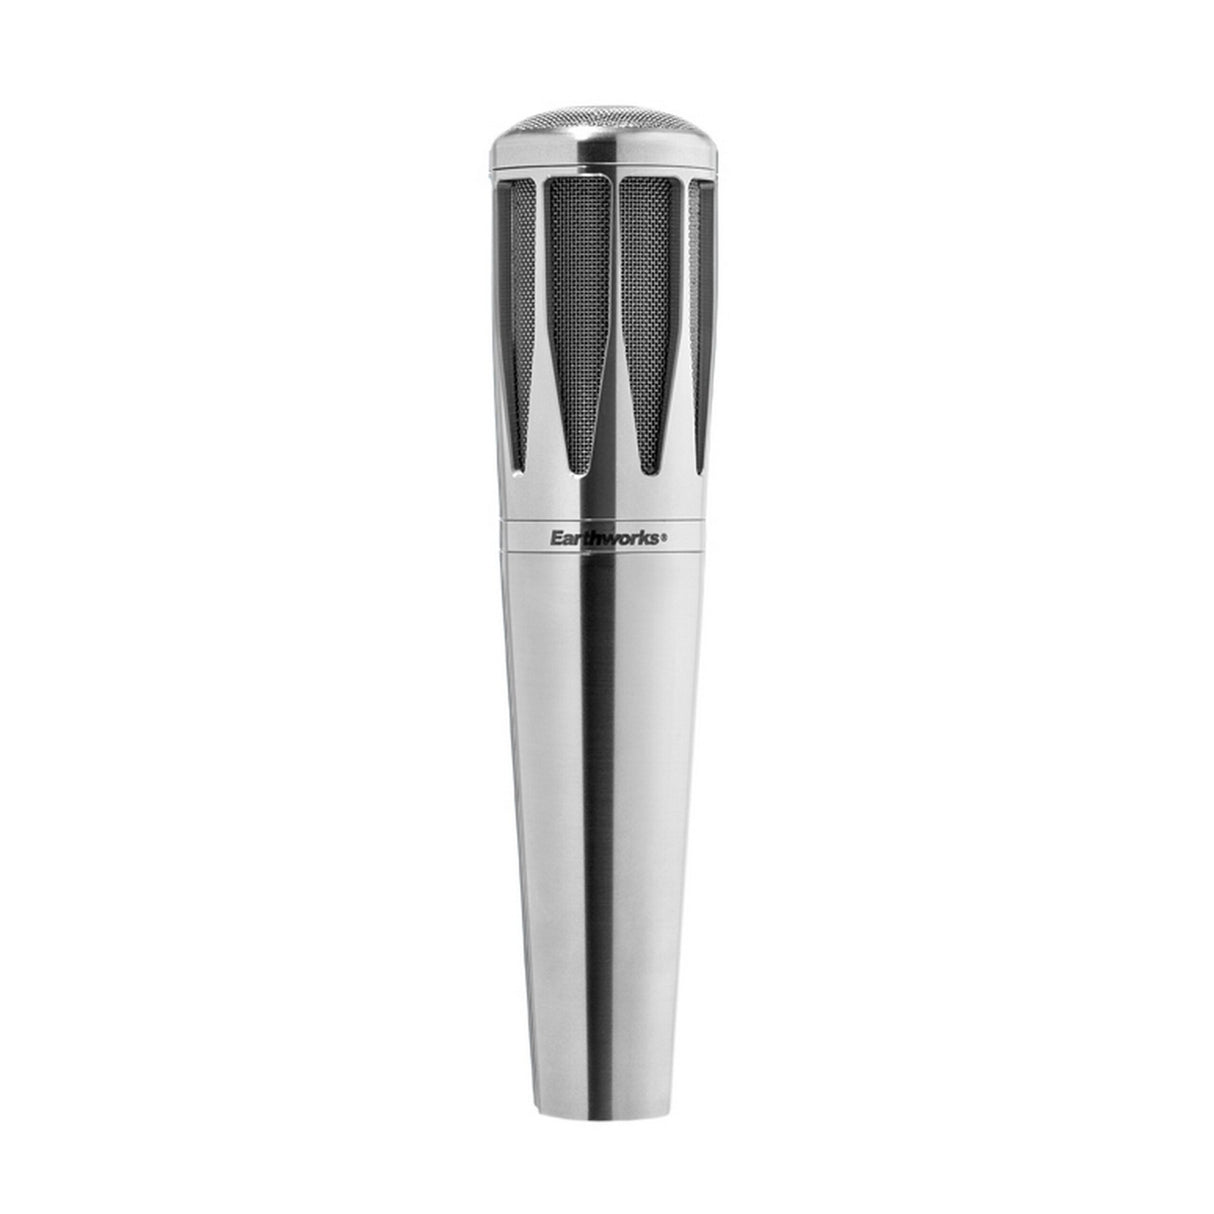 Earthworks SR314 Premium Cardioid Handheld Vocal Condenser Microphone, Stainless Steel